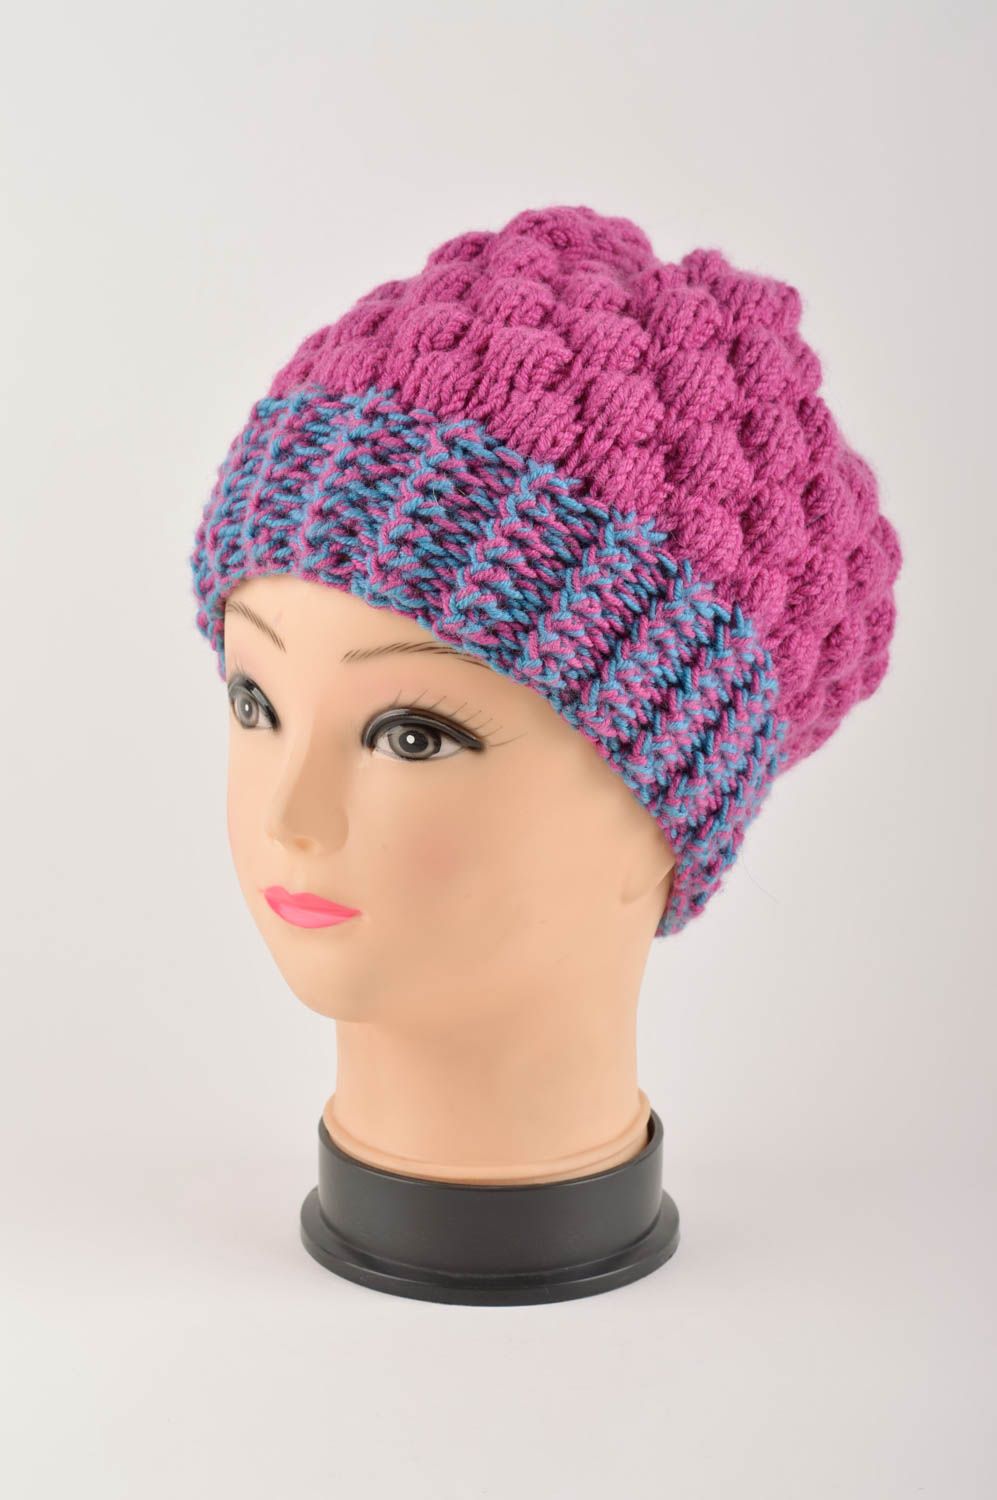 Handmade hat winter hat for girls unusual gift designer hat gift ideas  photo 2